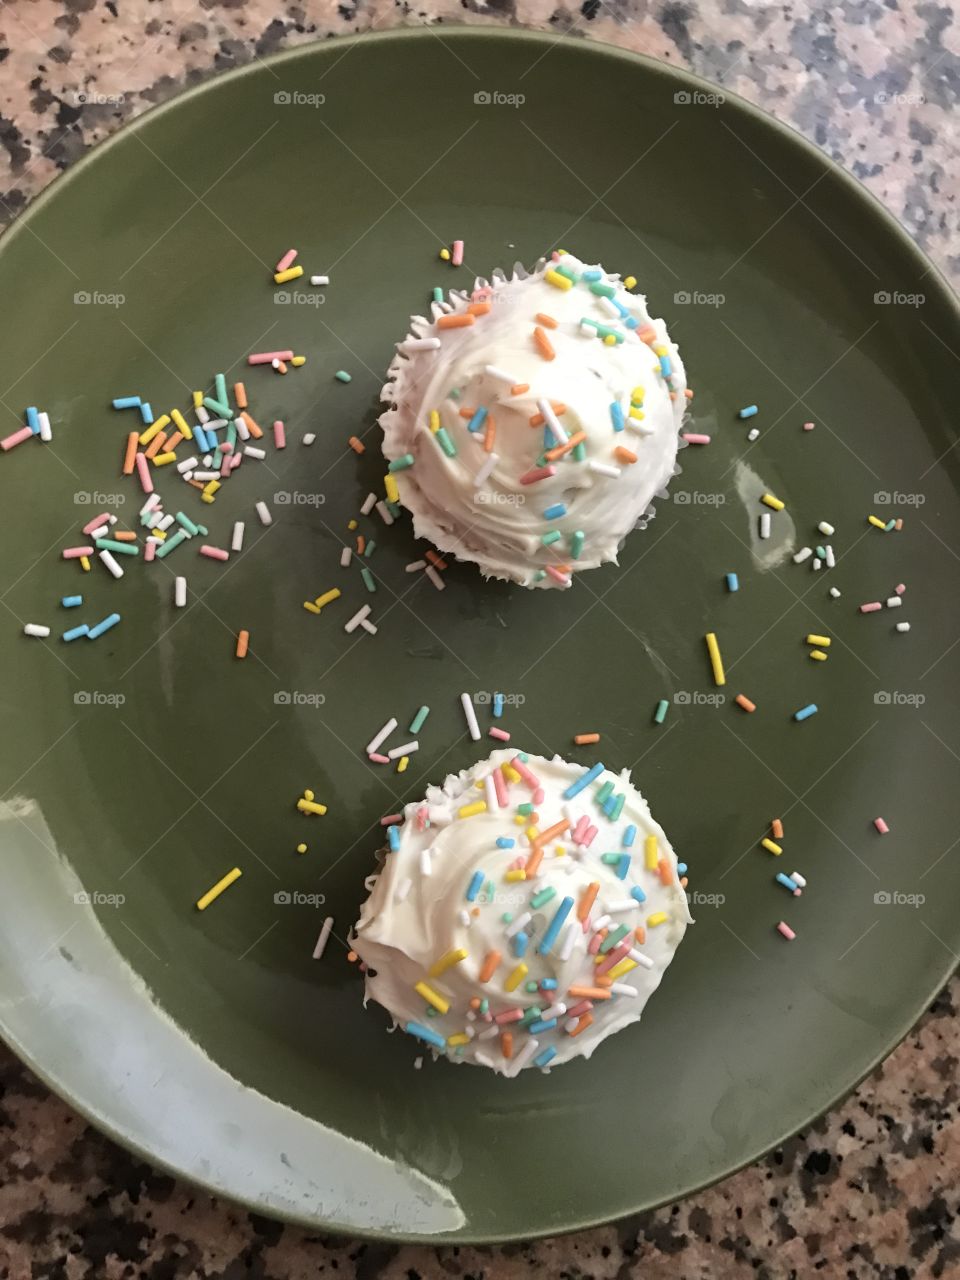 2 Cupcakes sprinkles everywhere 😌